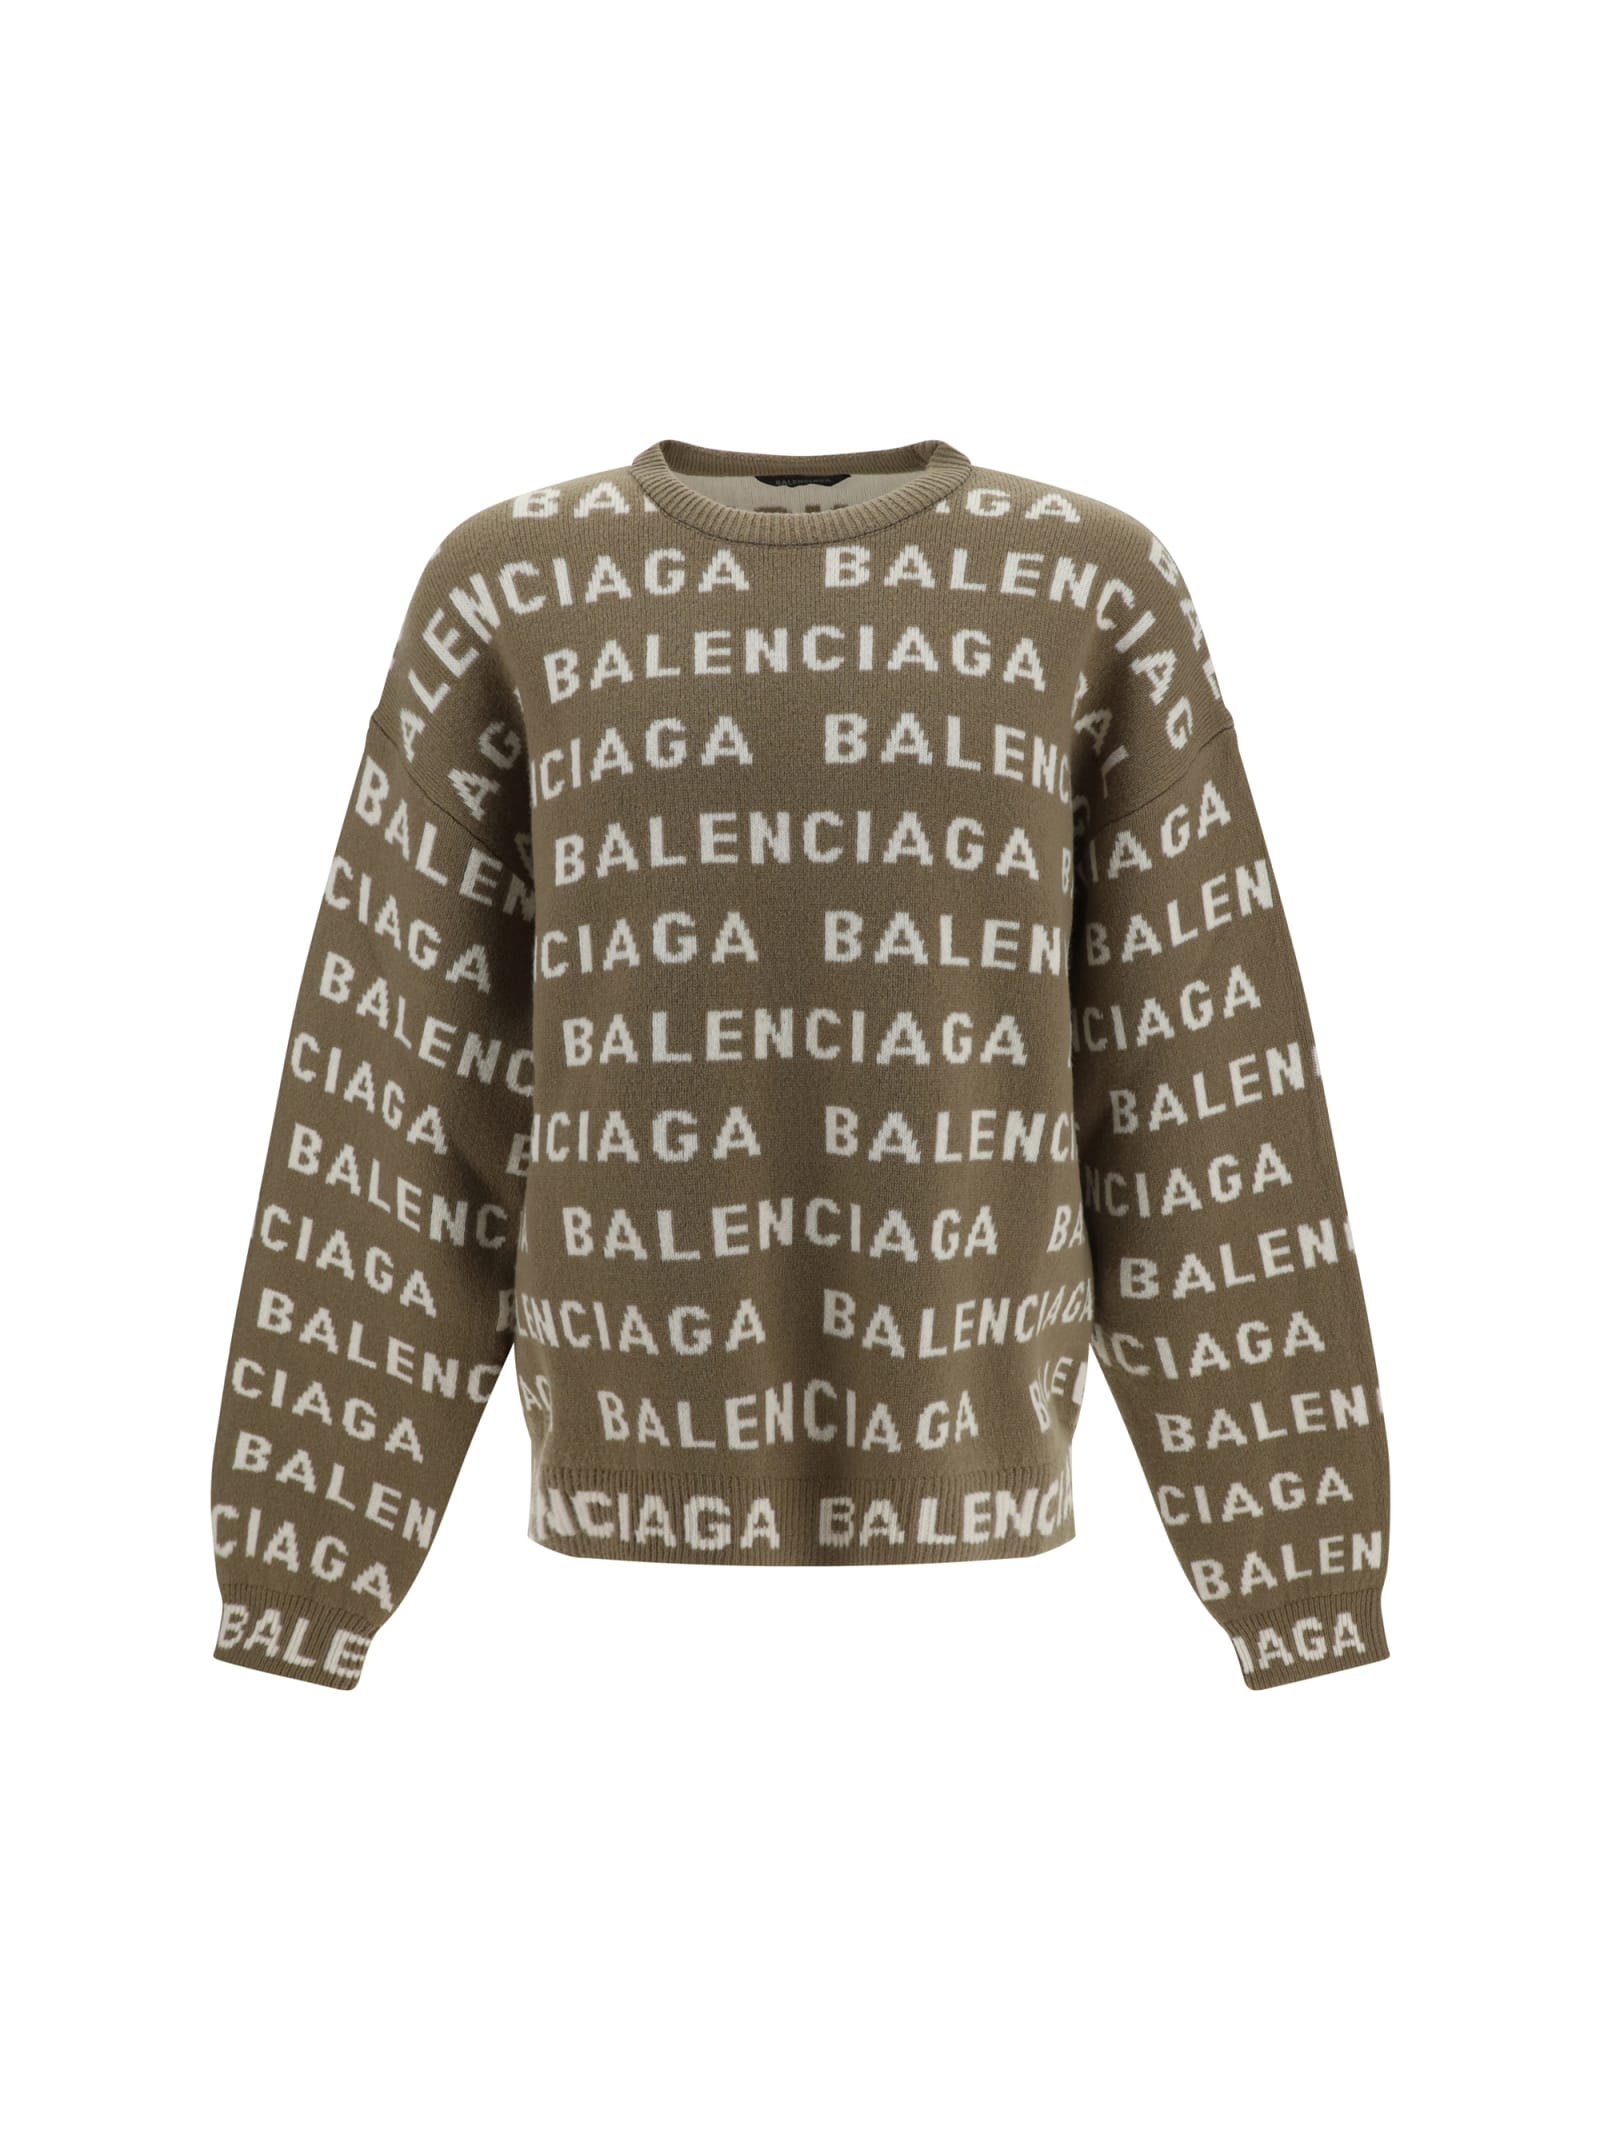 Balenciaga Sweater In Beige